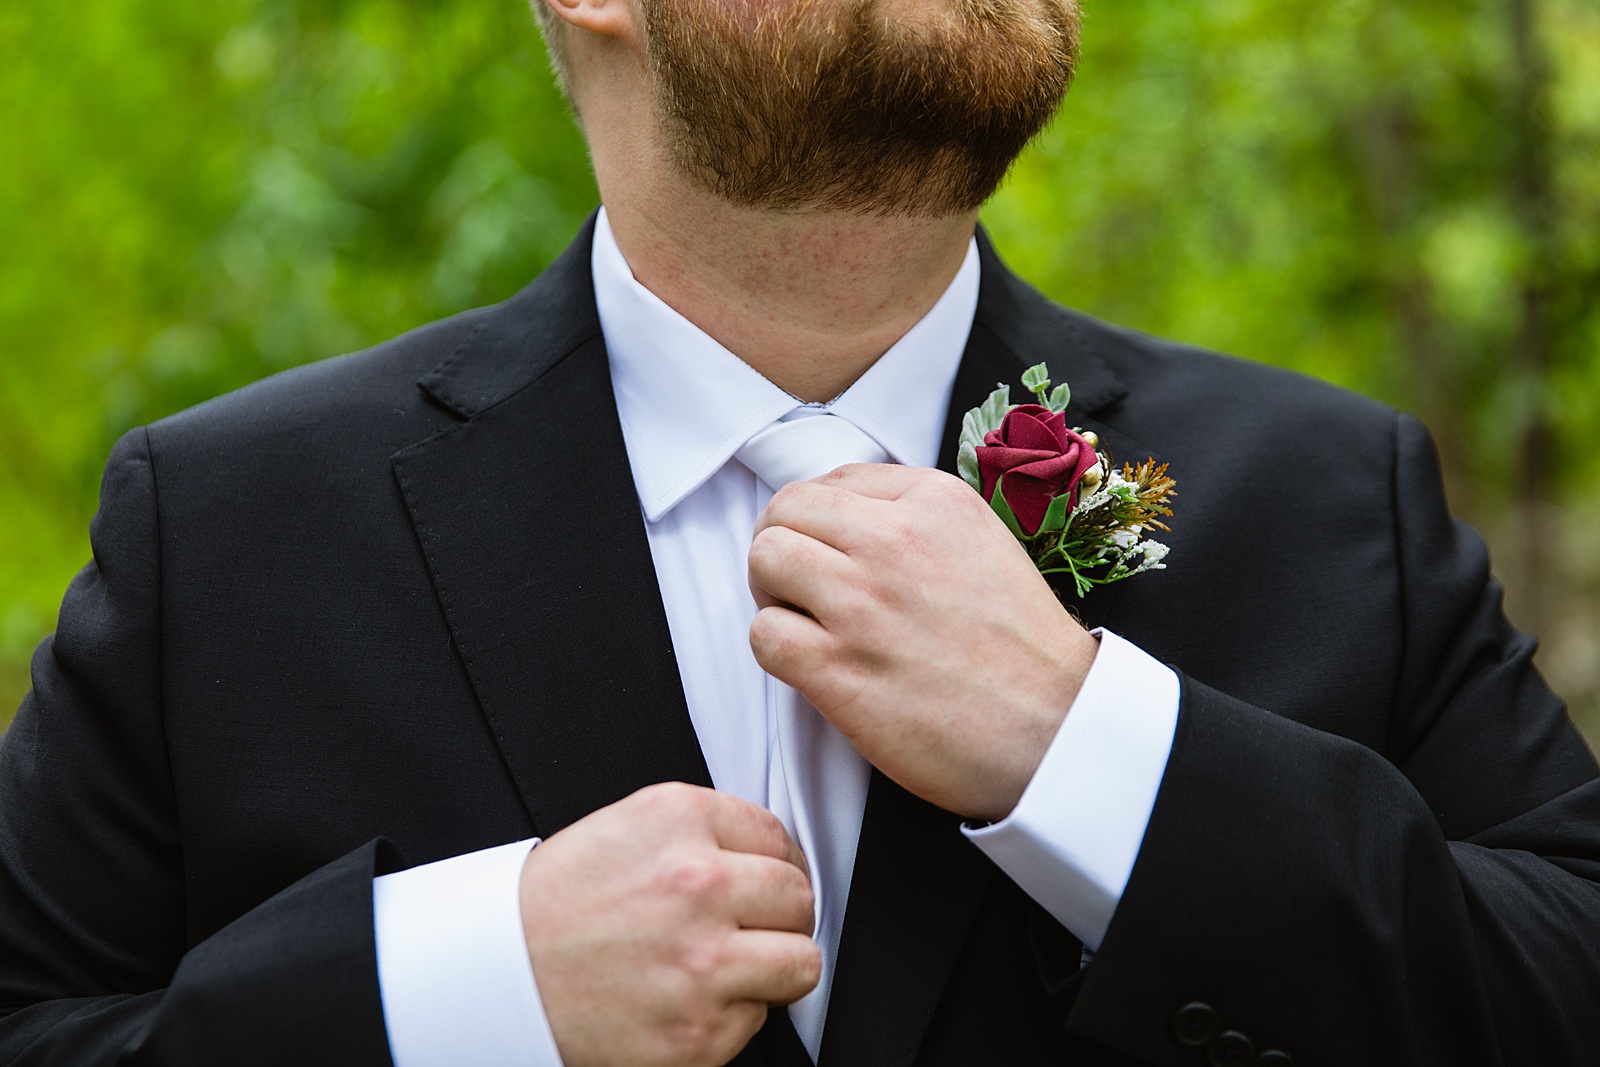 Groom adjusting his tie for his wedding day by Sedona wedding photographers PMA Photography.